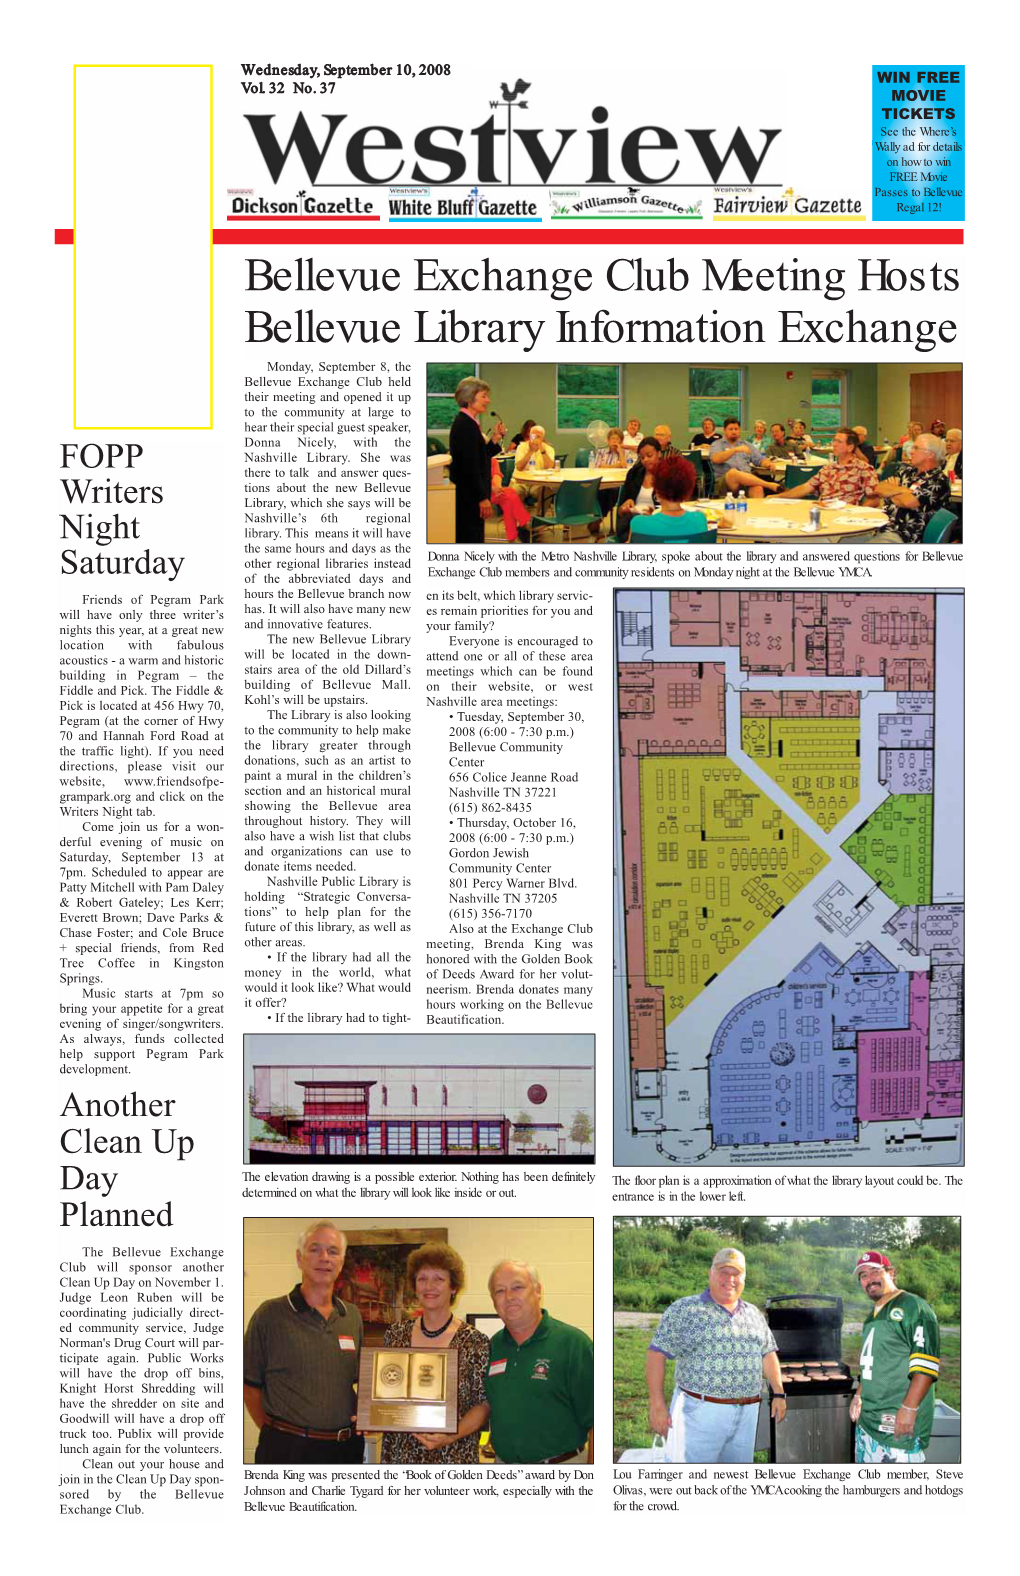 Bellevue Exchange Club Meeting Hosts Bellevue Library Information Exchange